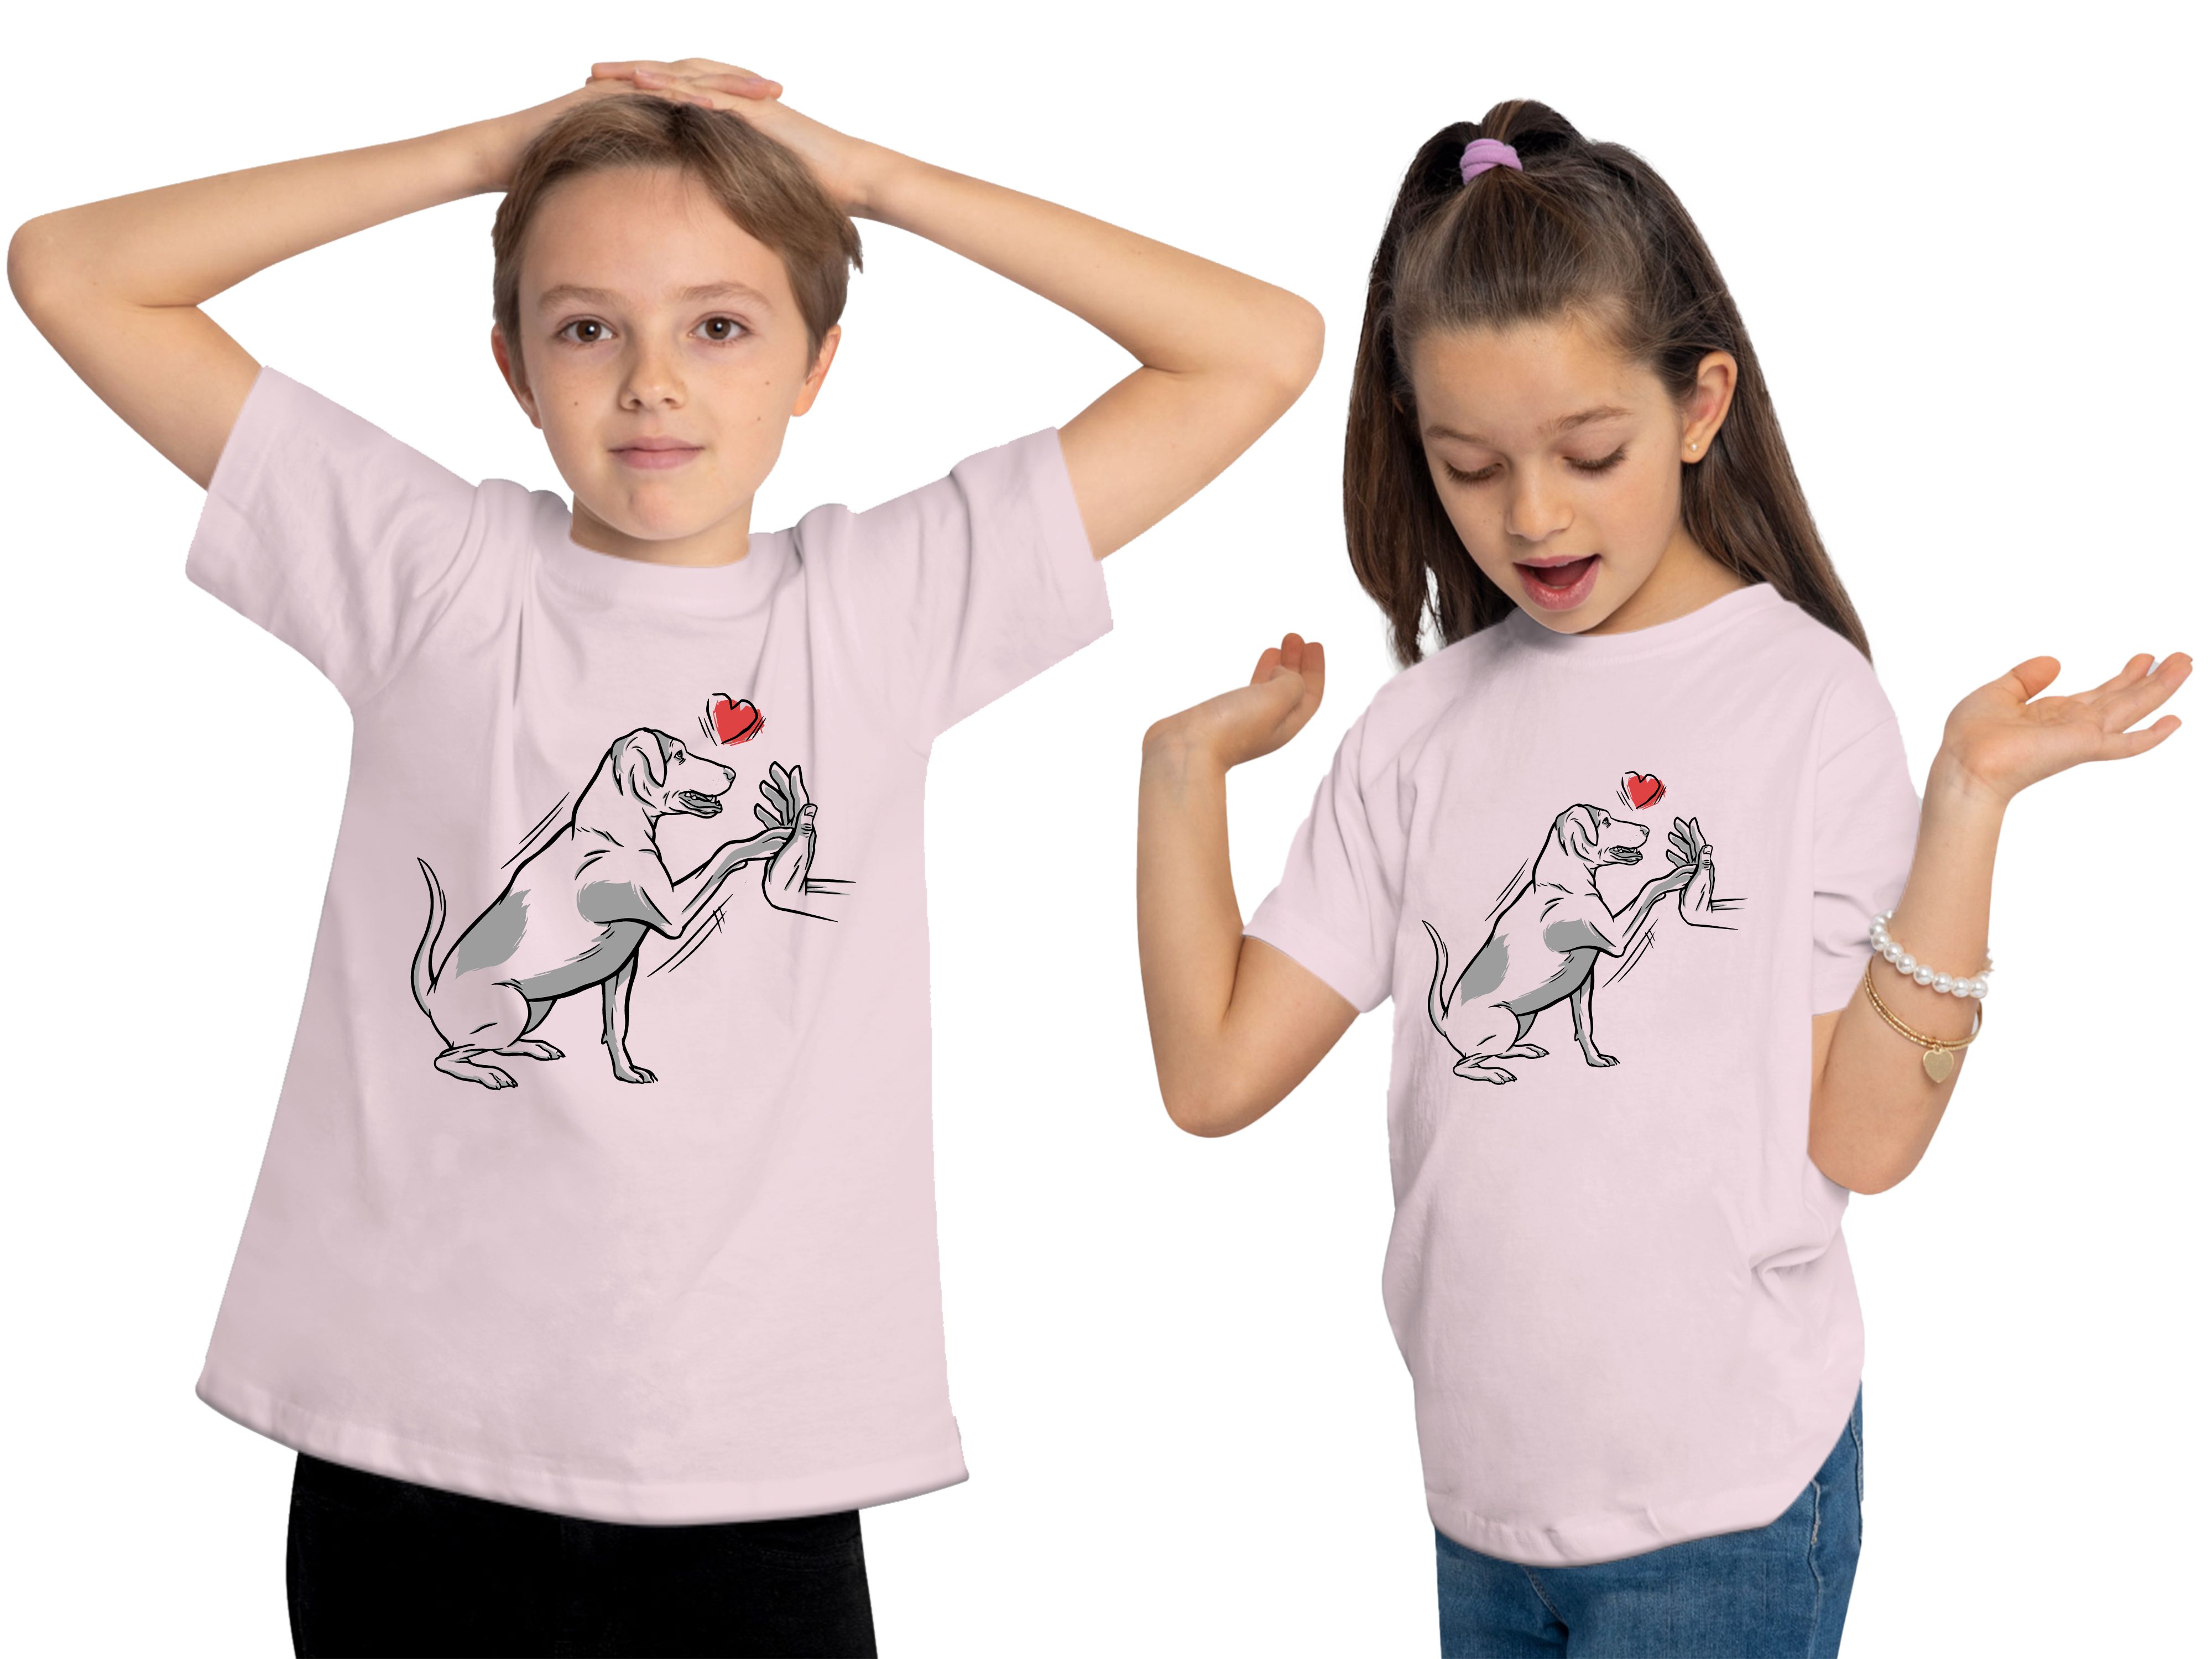 MyDesign24 Print-Shirt Kinder Hunde rosa Aufdruck, Labrador bedruckt - Pfötchen i234 gibt T-Shirt mit Baumwollshirt